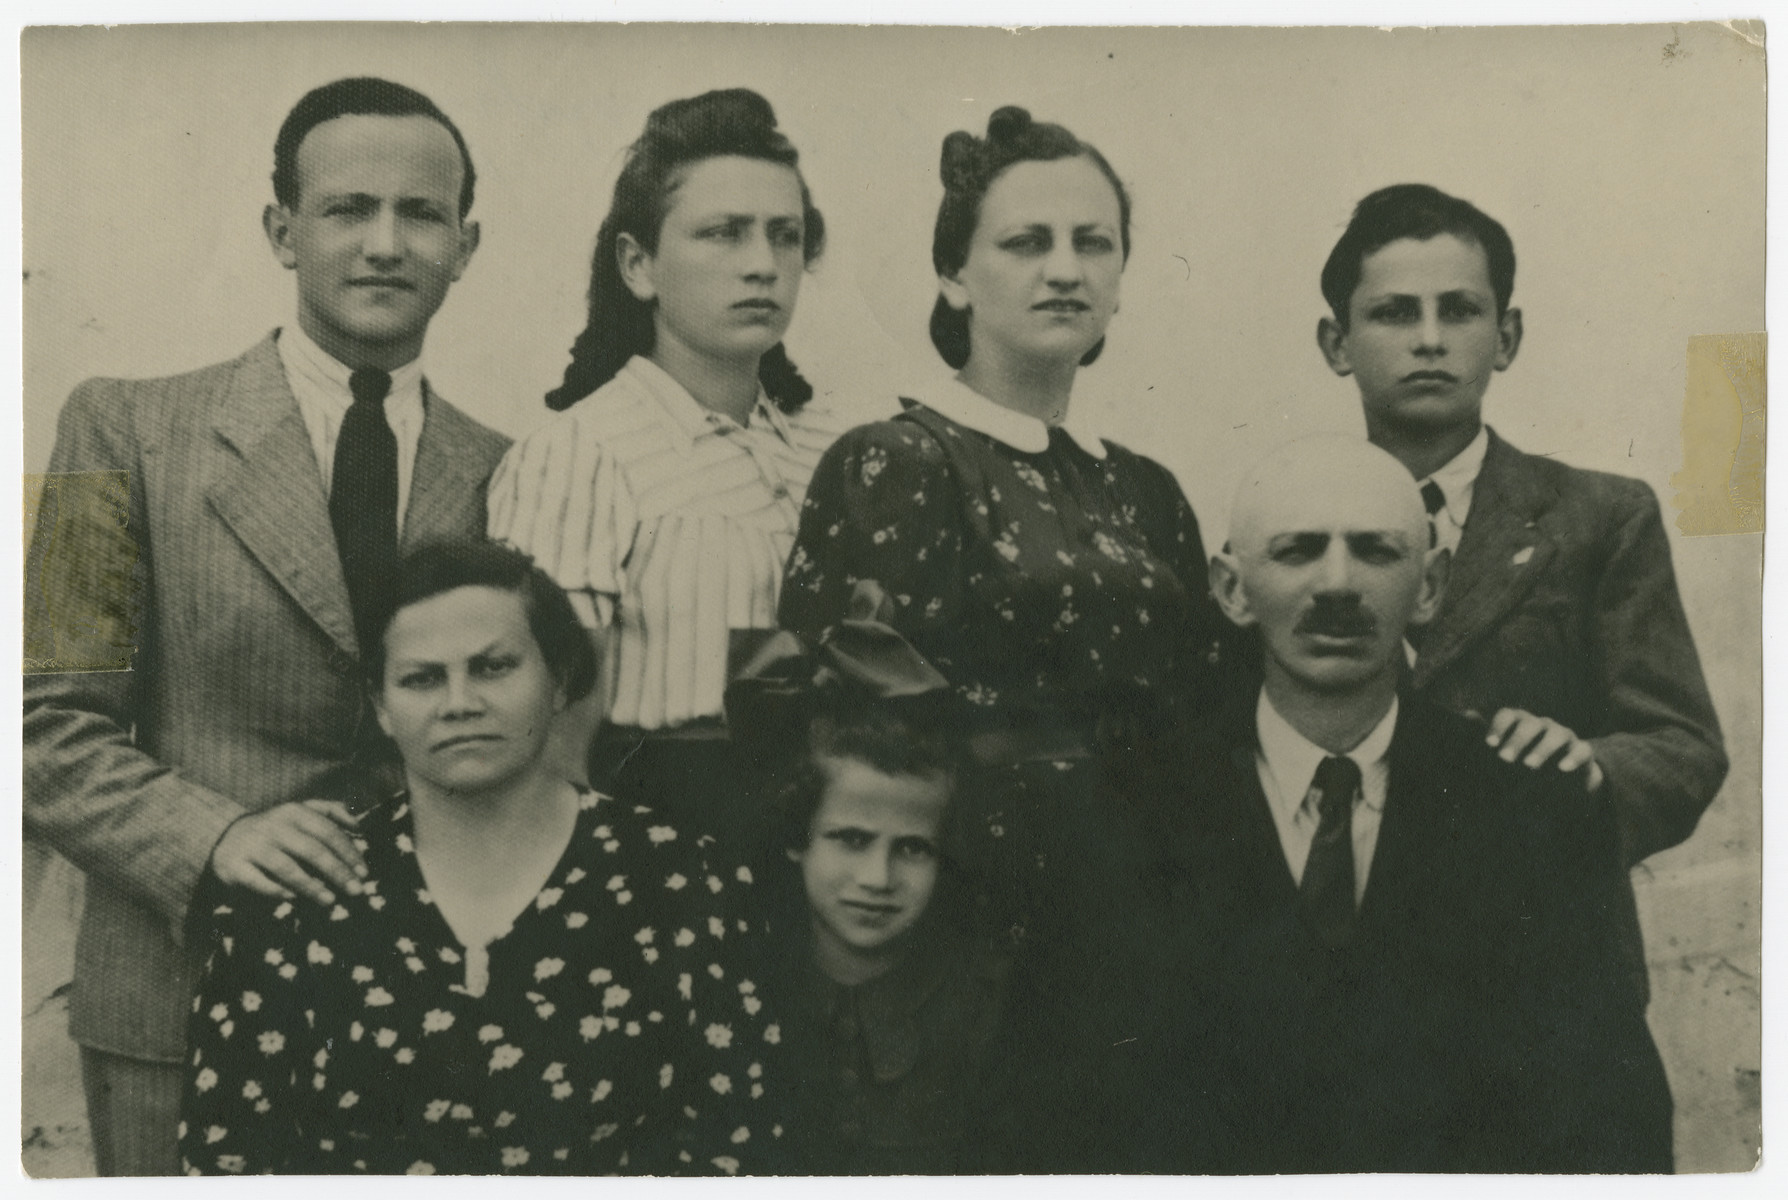 Prewar portrait of the Glucksman family.